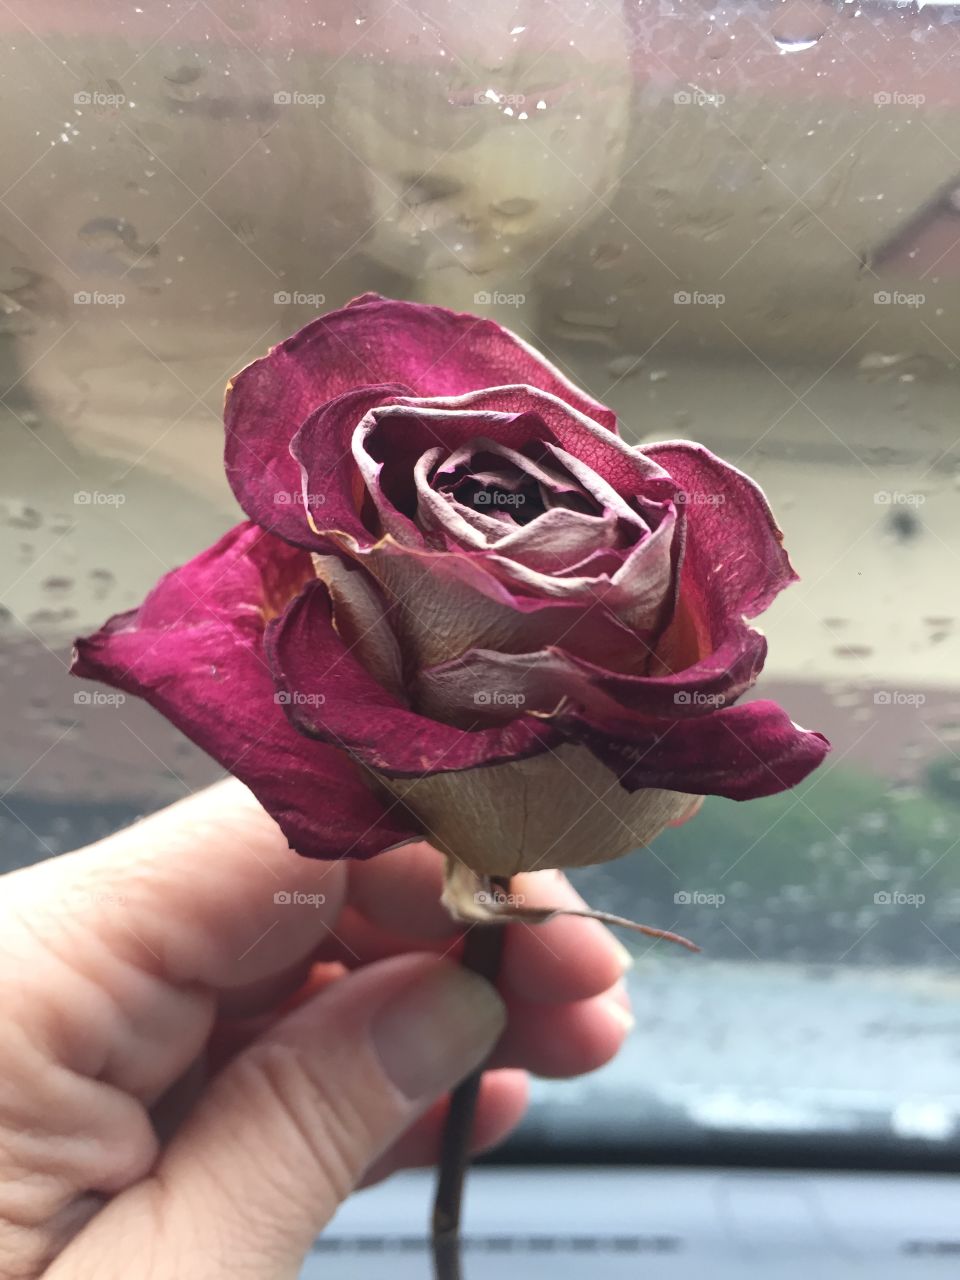 Same beautiful dried rose